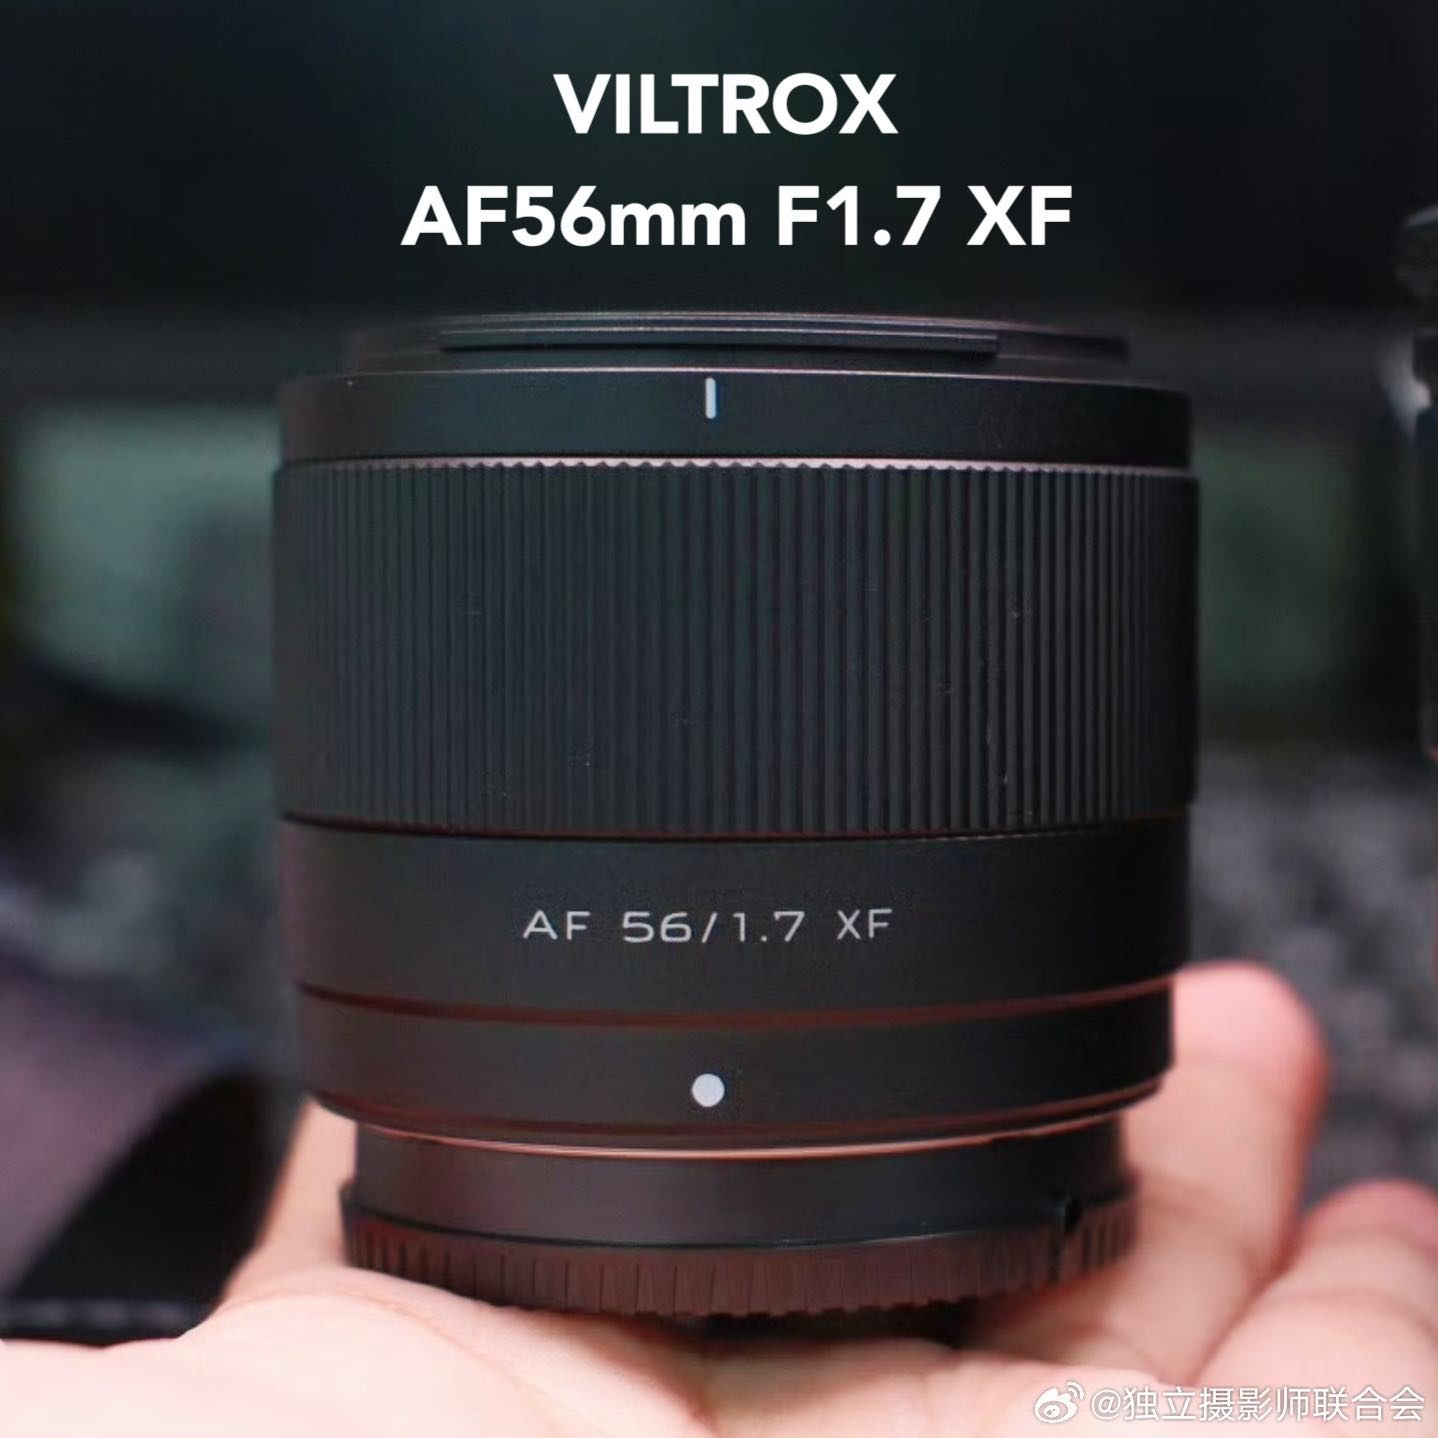 Viltrox AF 56mm f/1.7 STM ED IF Fuji X ( ÖN SİPARİŞ )